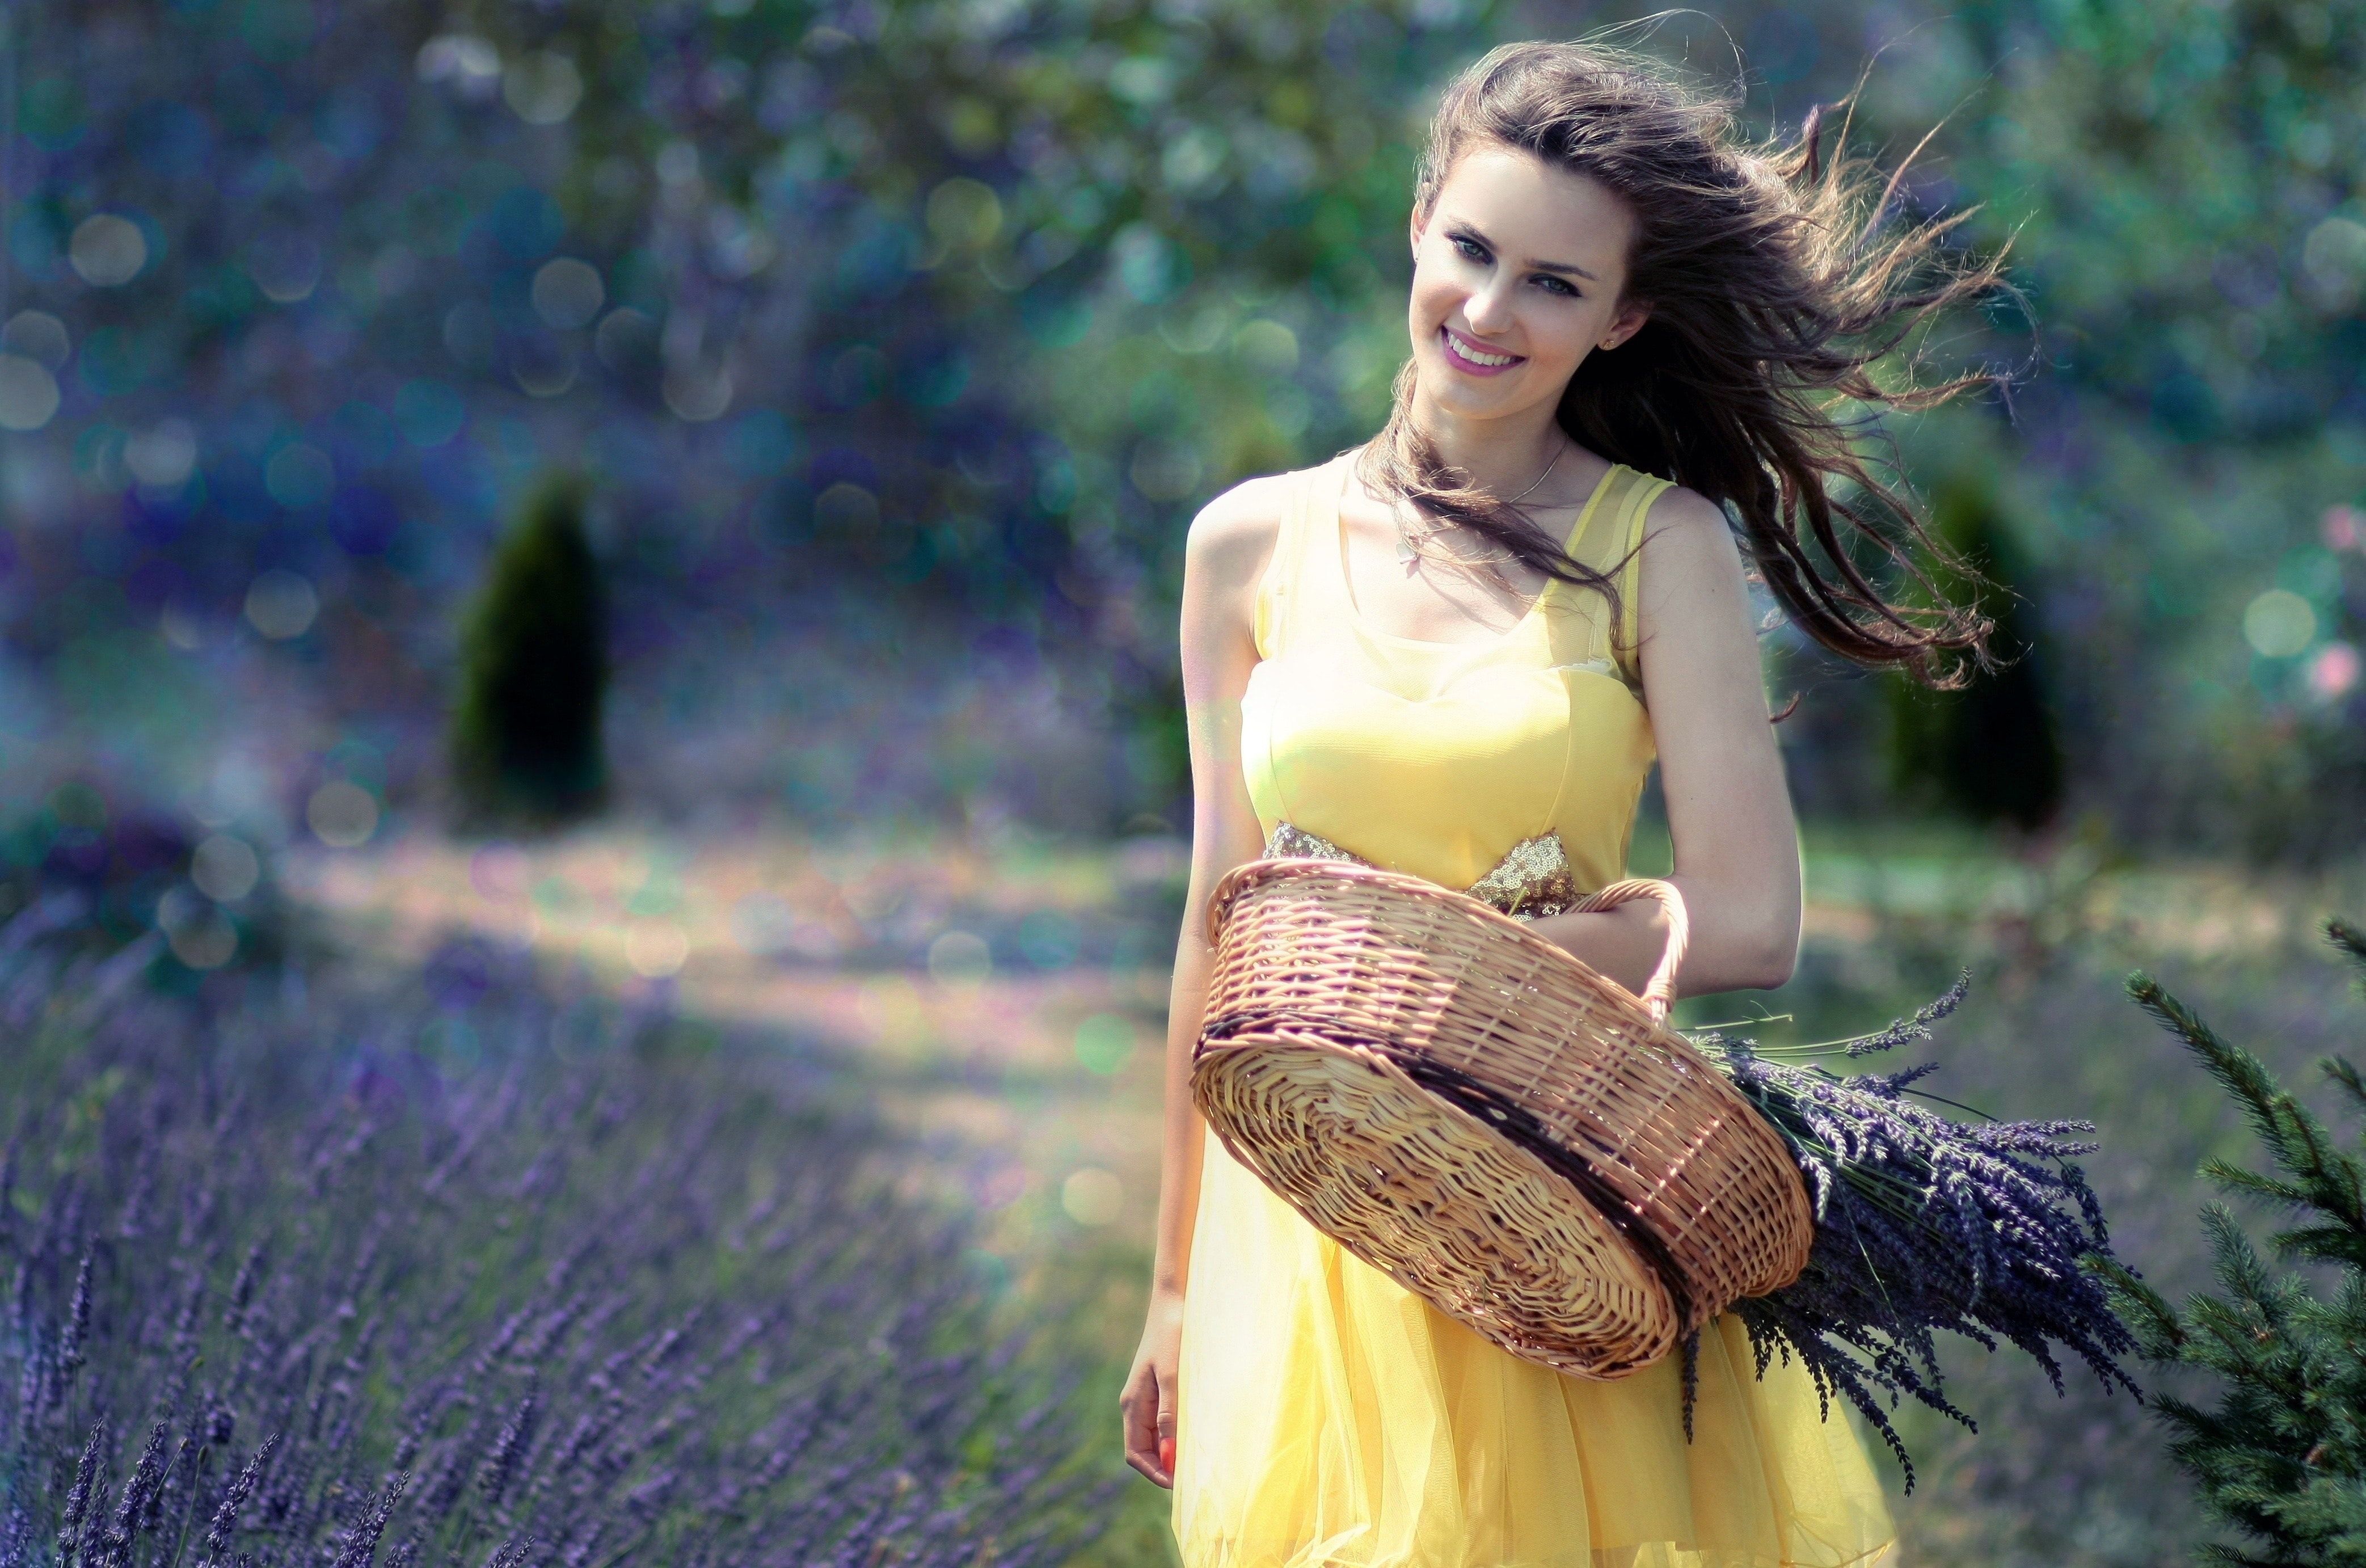 Woman in yellow maxi dress holding brown woven picnic basket walking during daytime photo